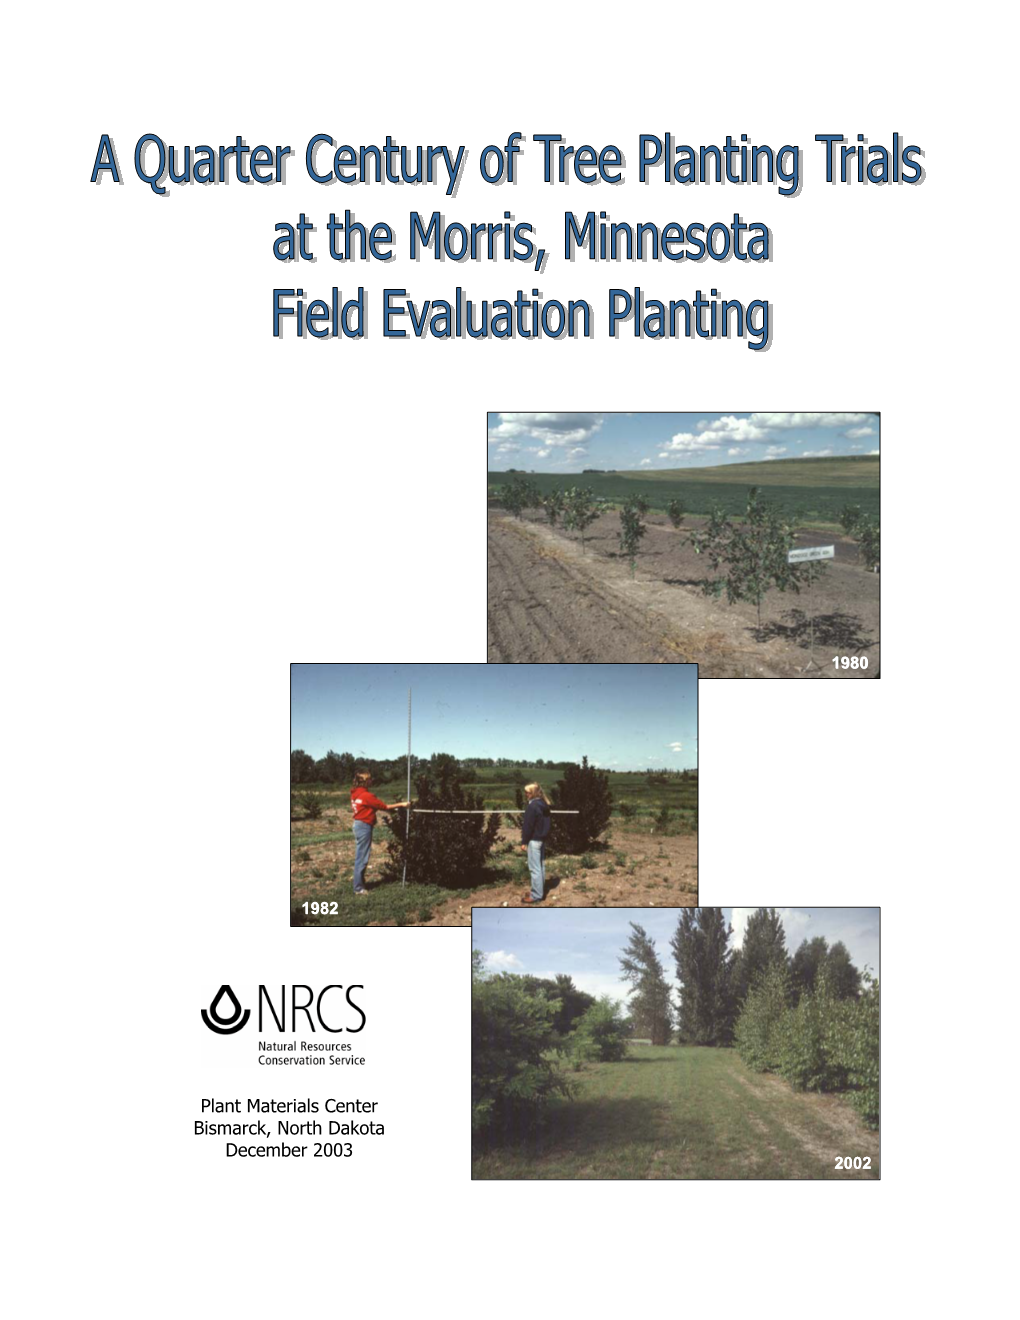 A Quarter Century of Tree Planting Trials at the Morris, Minnesota Field Evaluation Planting